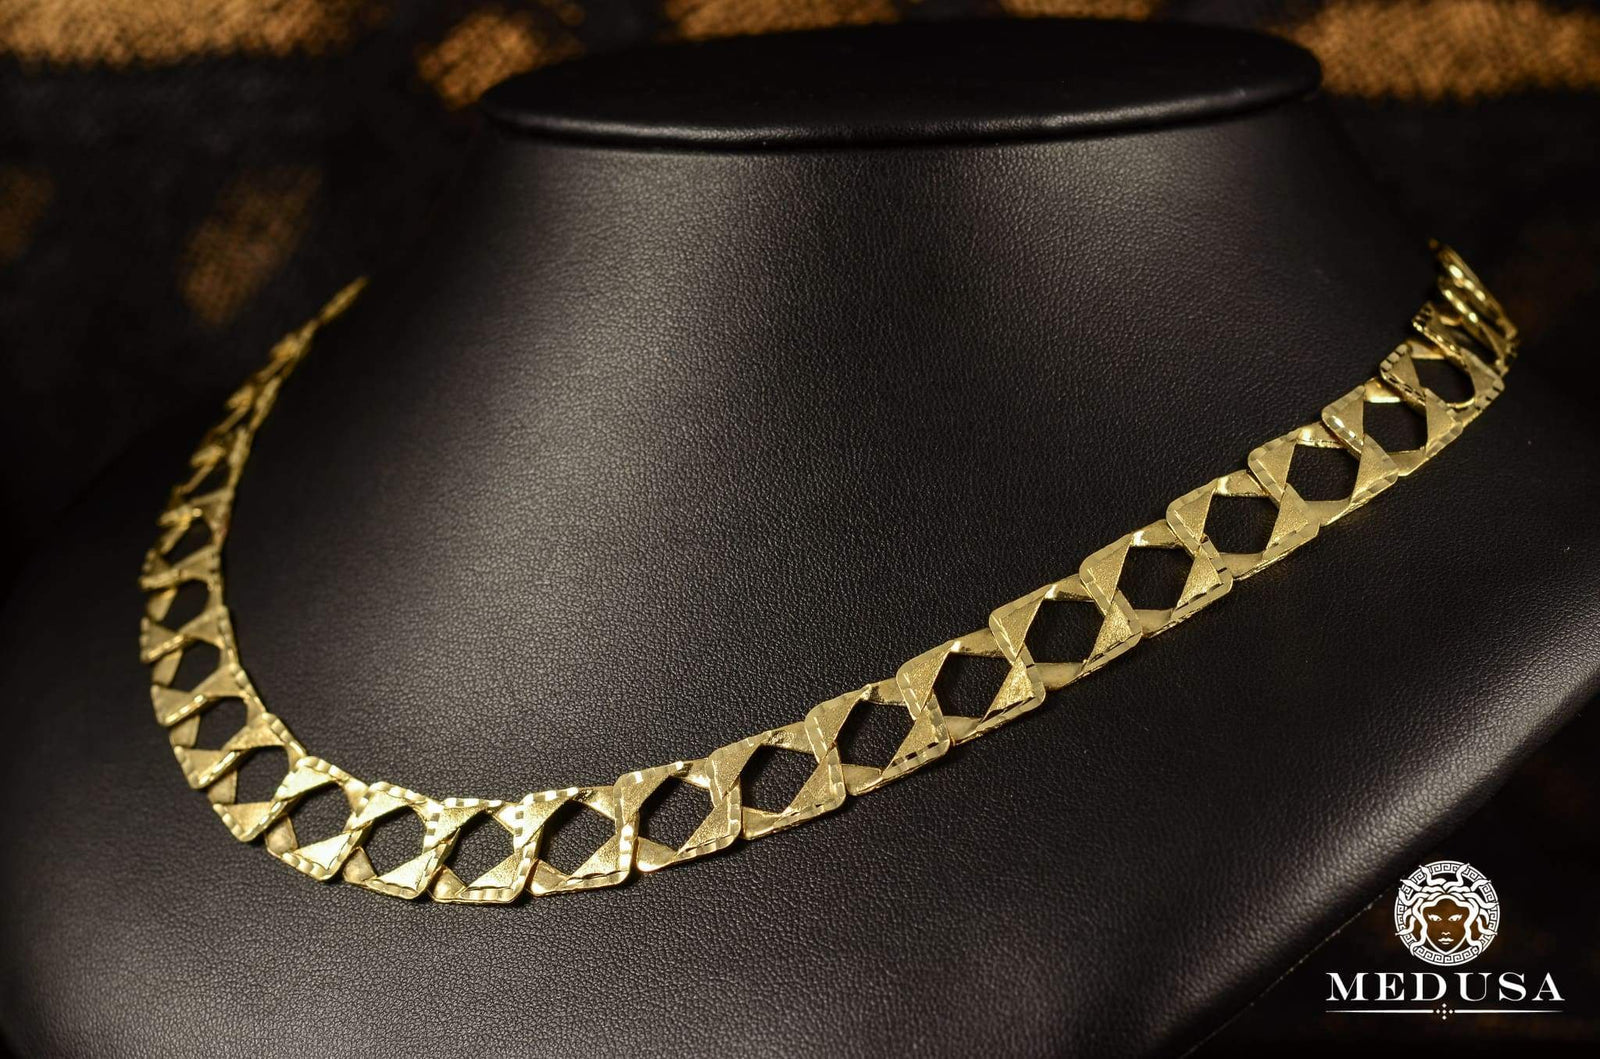 Men's Gold Chain Necklace, 4mm Diamond Cut Figaro Chain, Long Chain Ne –  MeltemiCollection